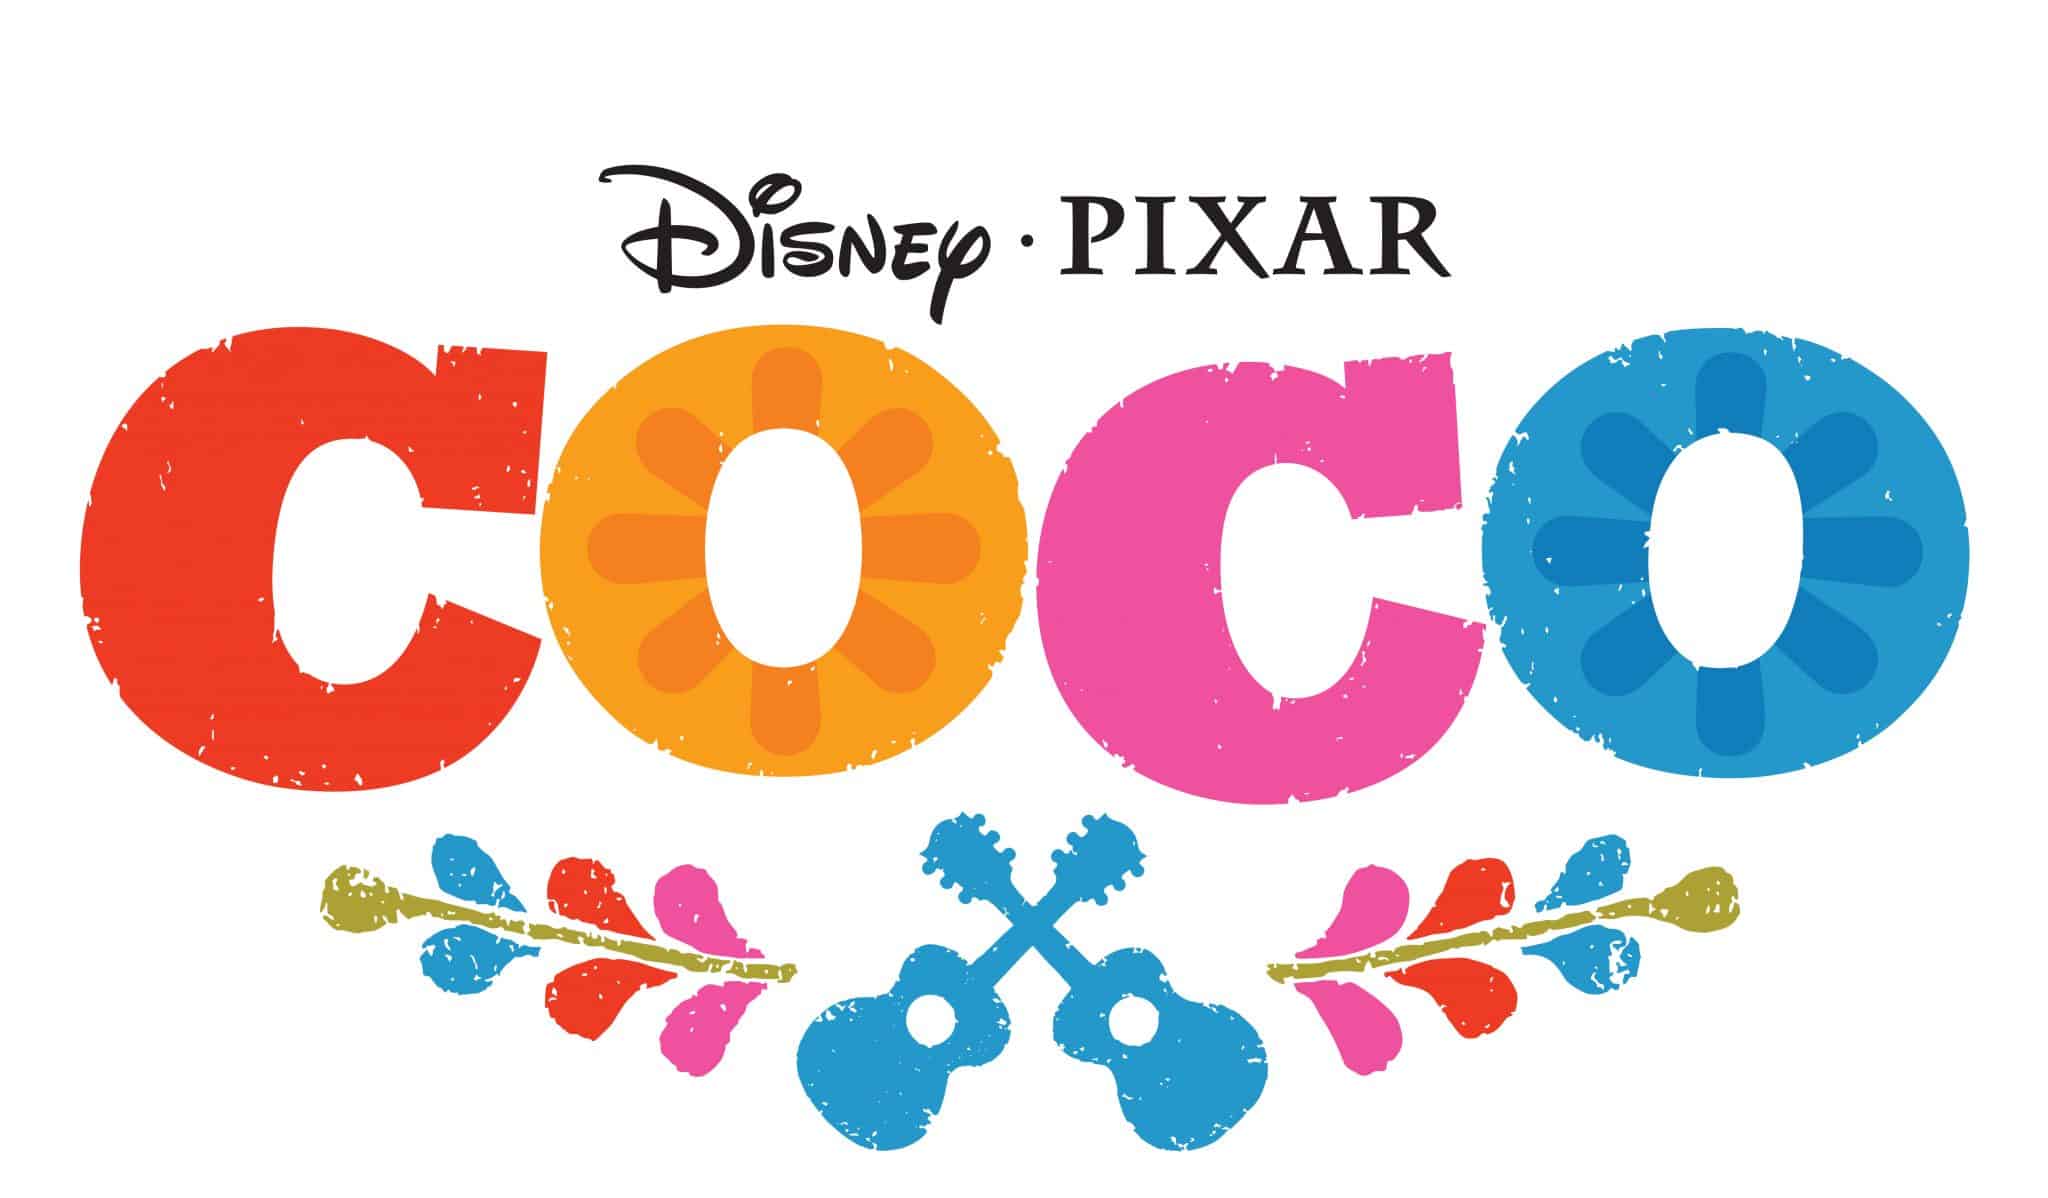 NEW Pixar Coco Trailer + Recipes #PixarCoco